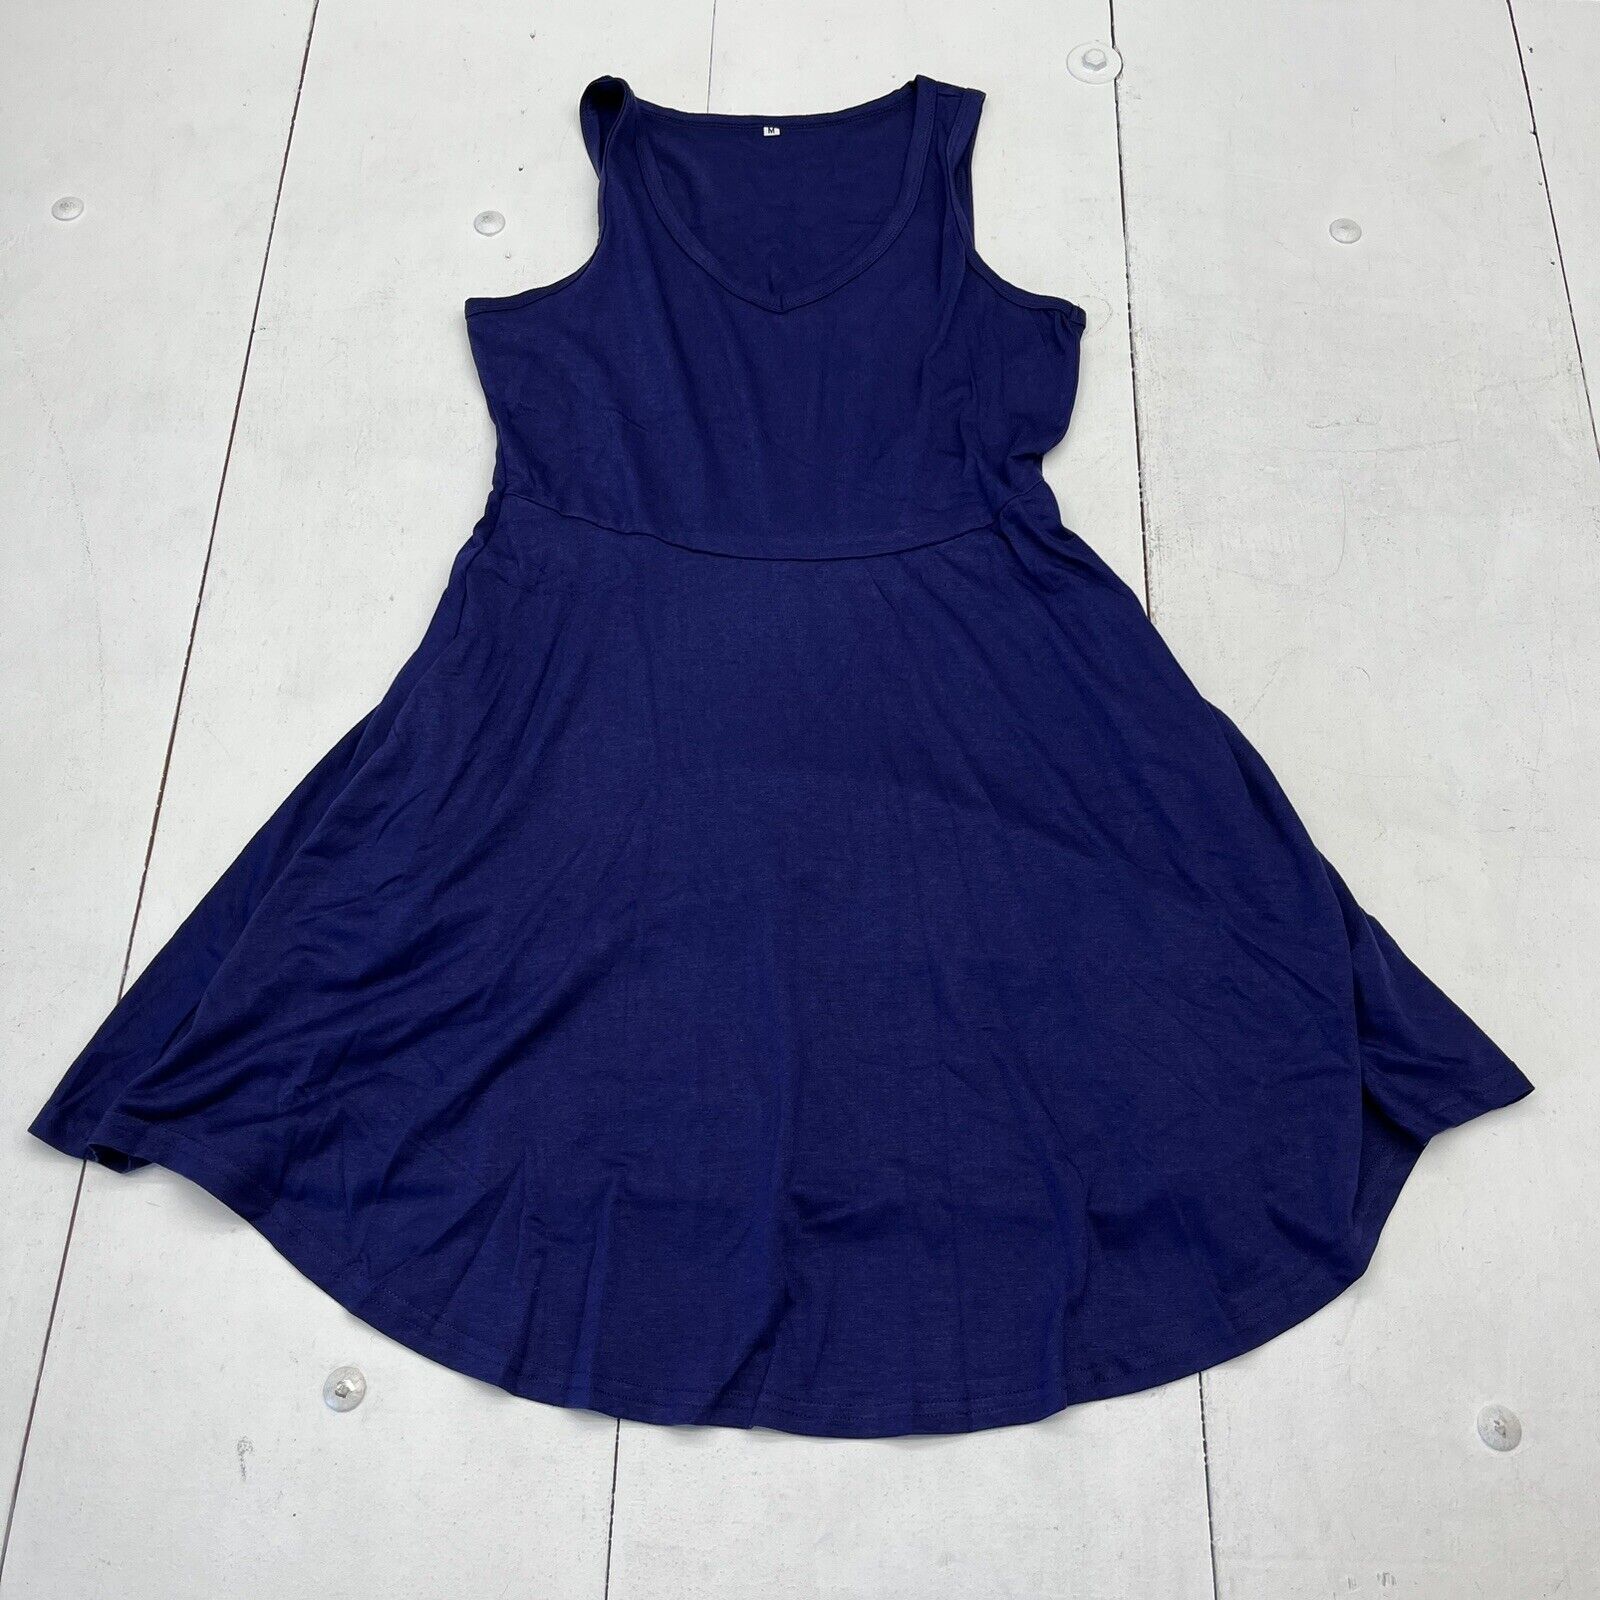 Unbranded Blue Sleeveless Dress Women’s Size Medium NEW